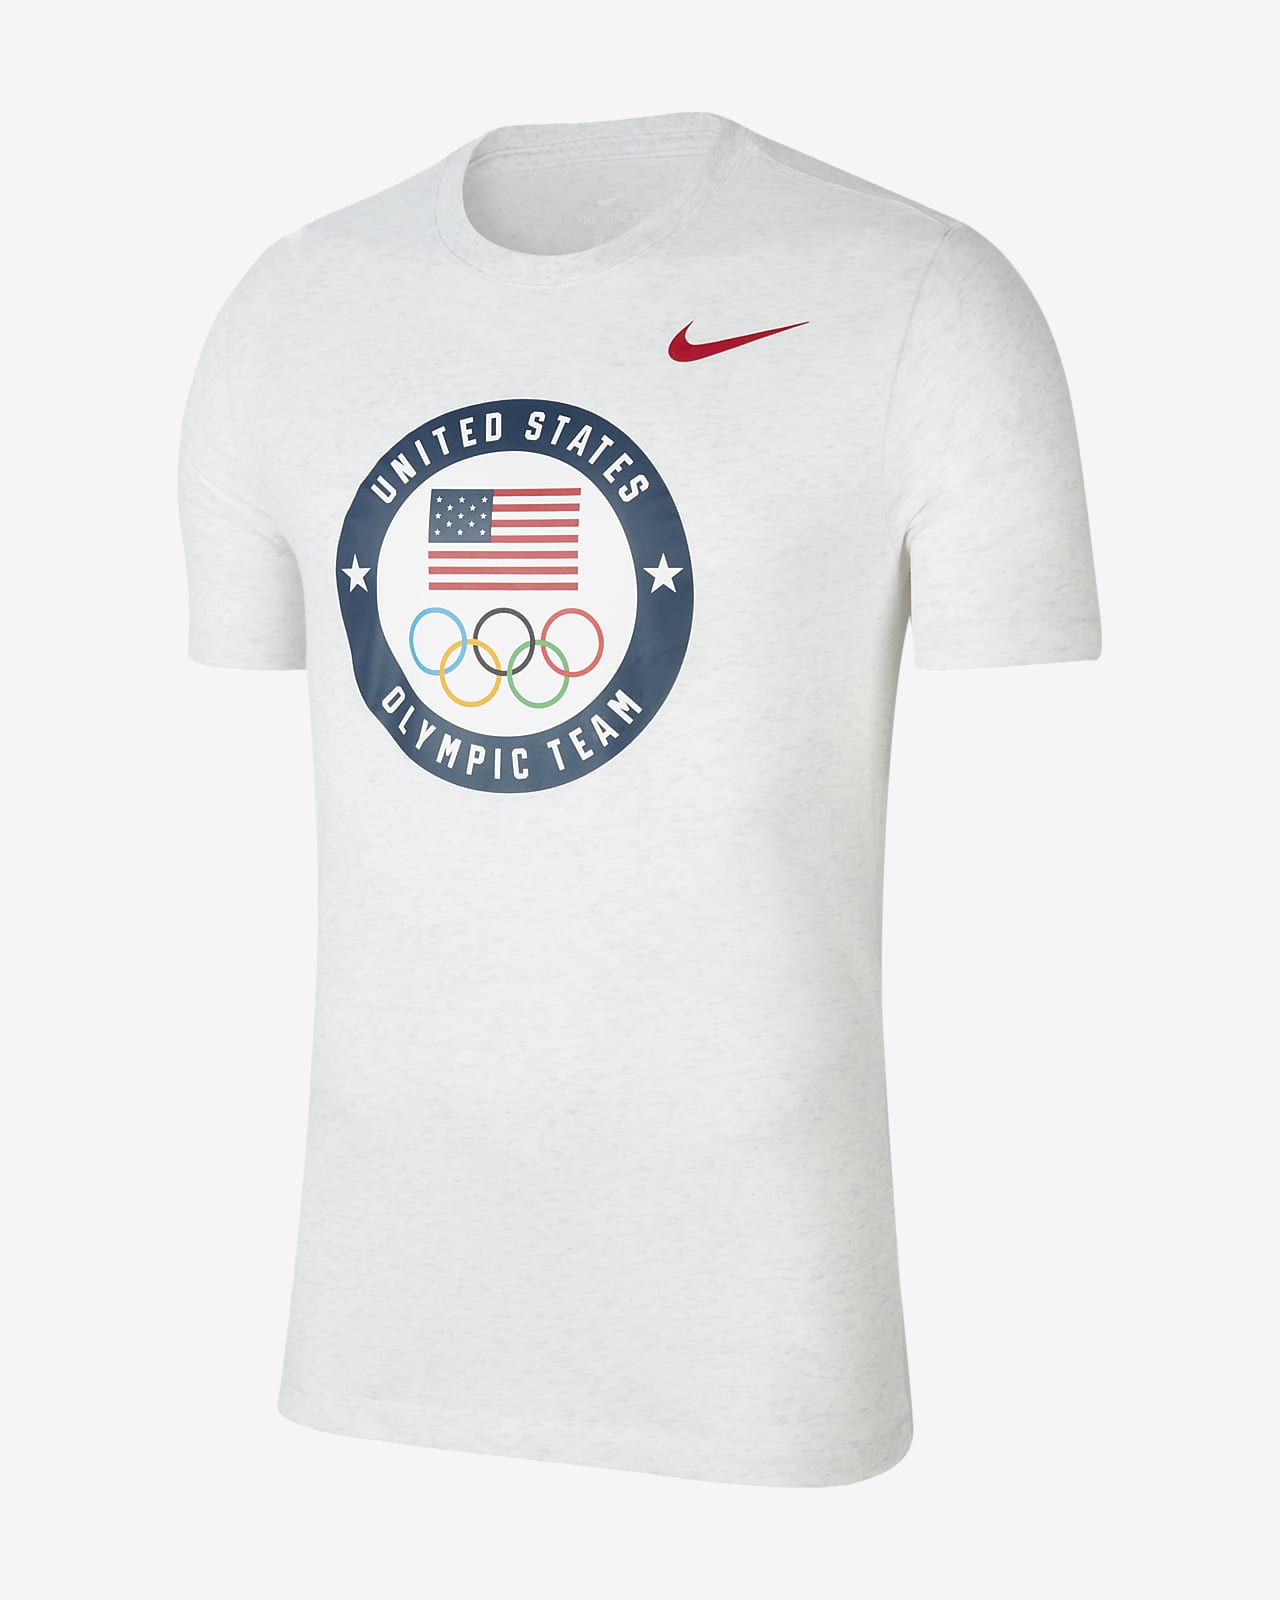 Nike Usa Shirt | art-kk.com